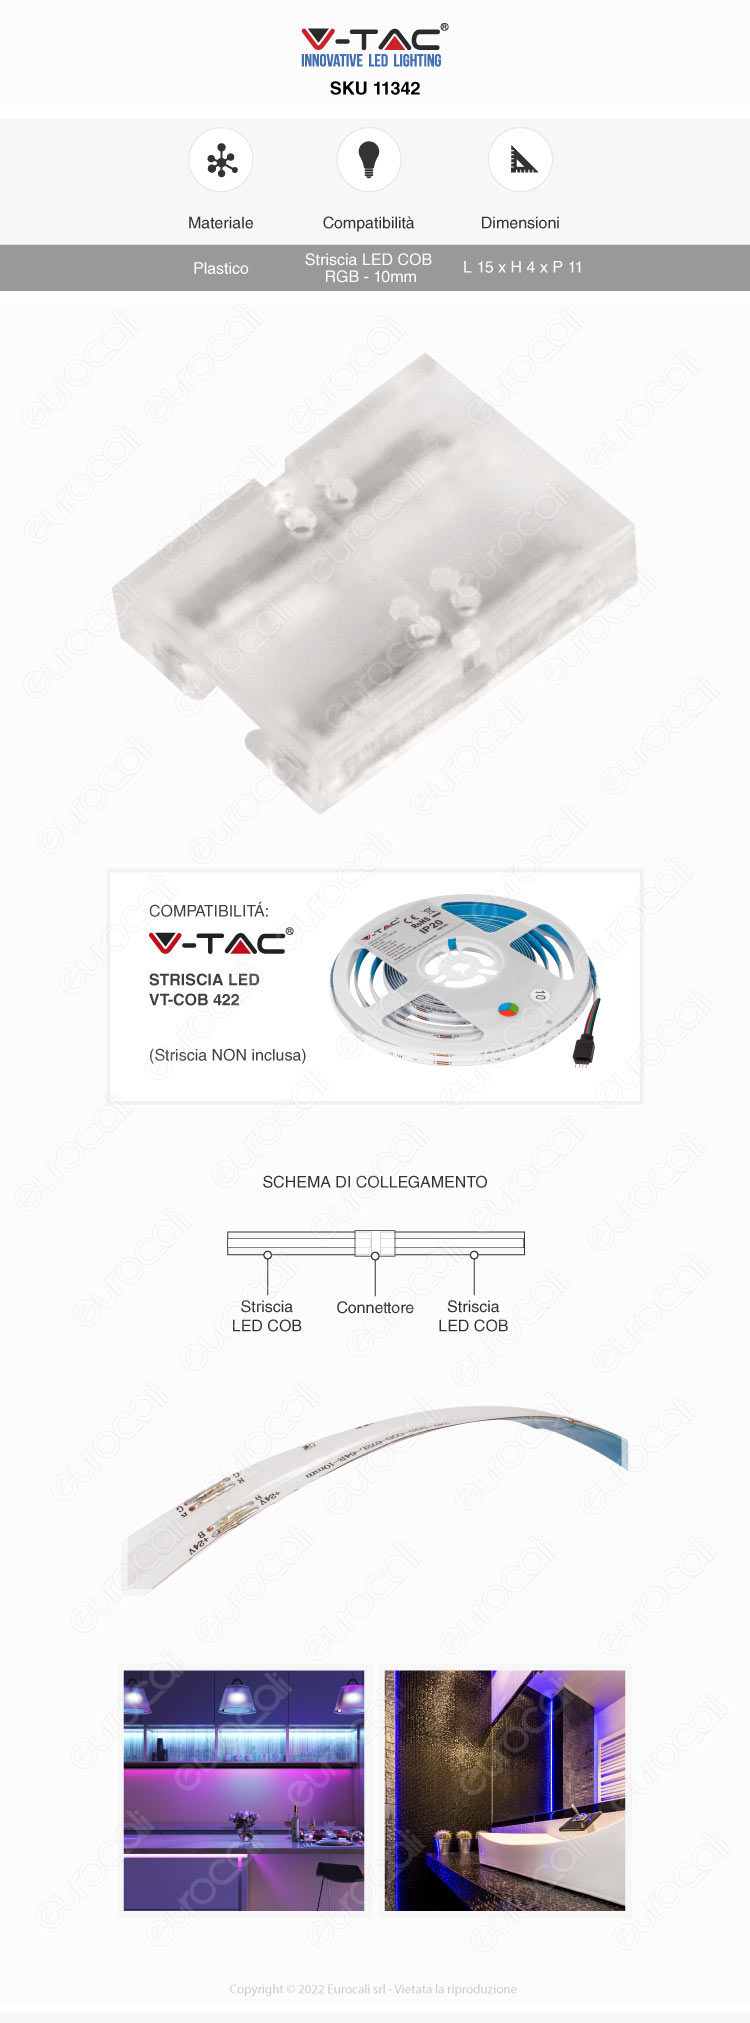 v-tac connettore intermedio rigido per strisce led cob